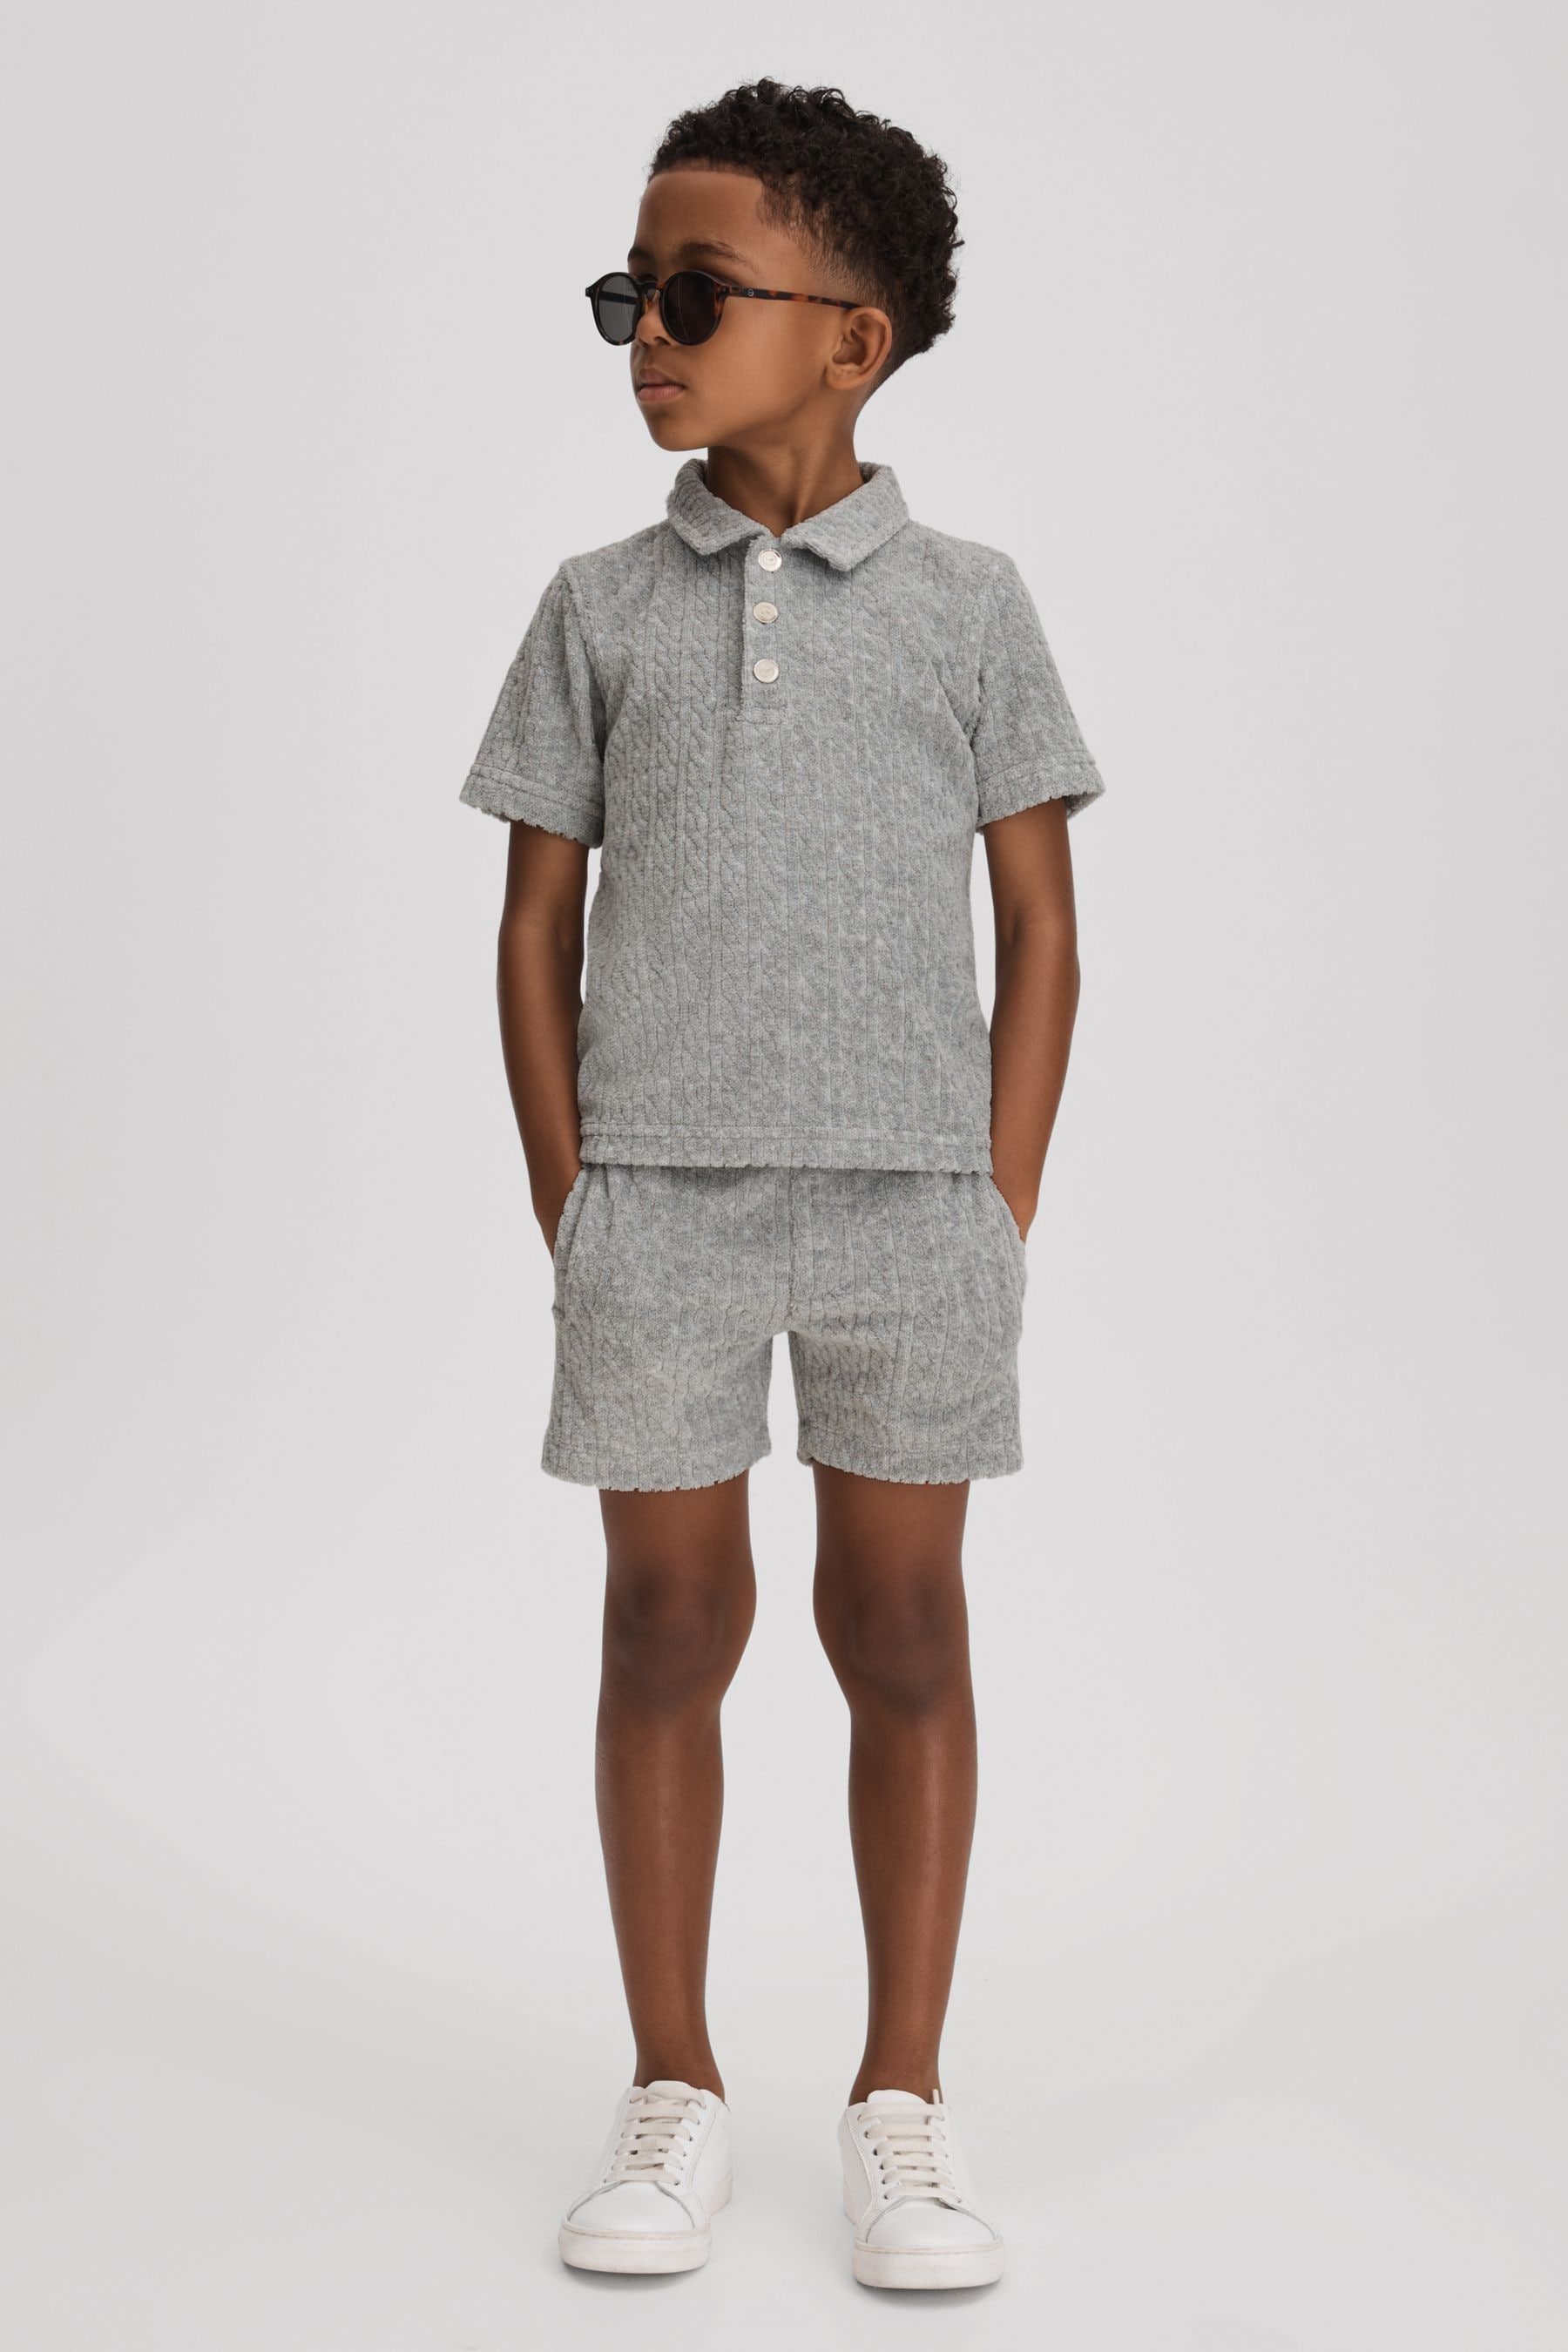 Reiss Kids' Fletcher - Soft Grey Junior Towelling Drawstring Shorts, Age 5-6 Years